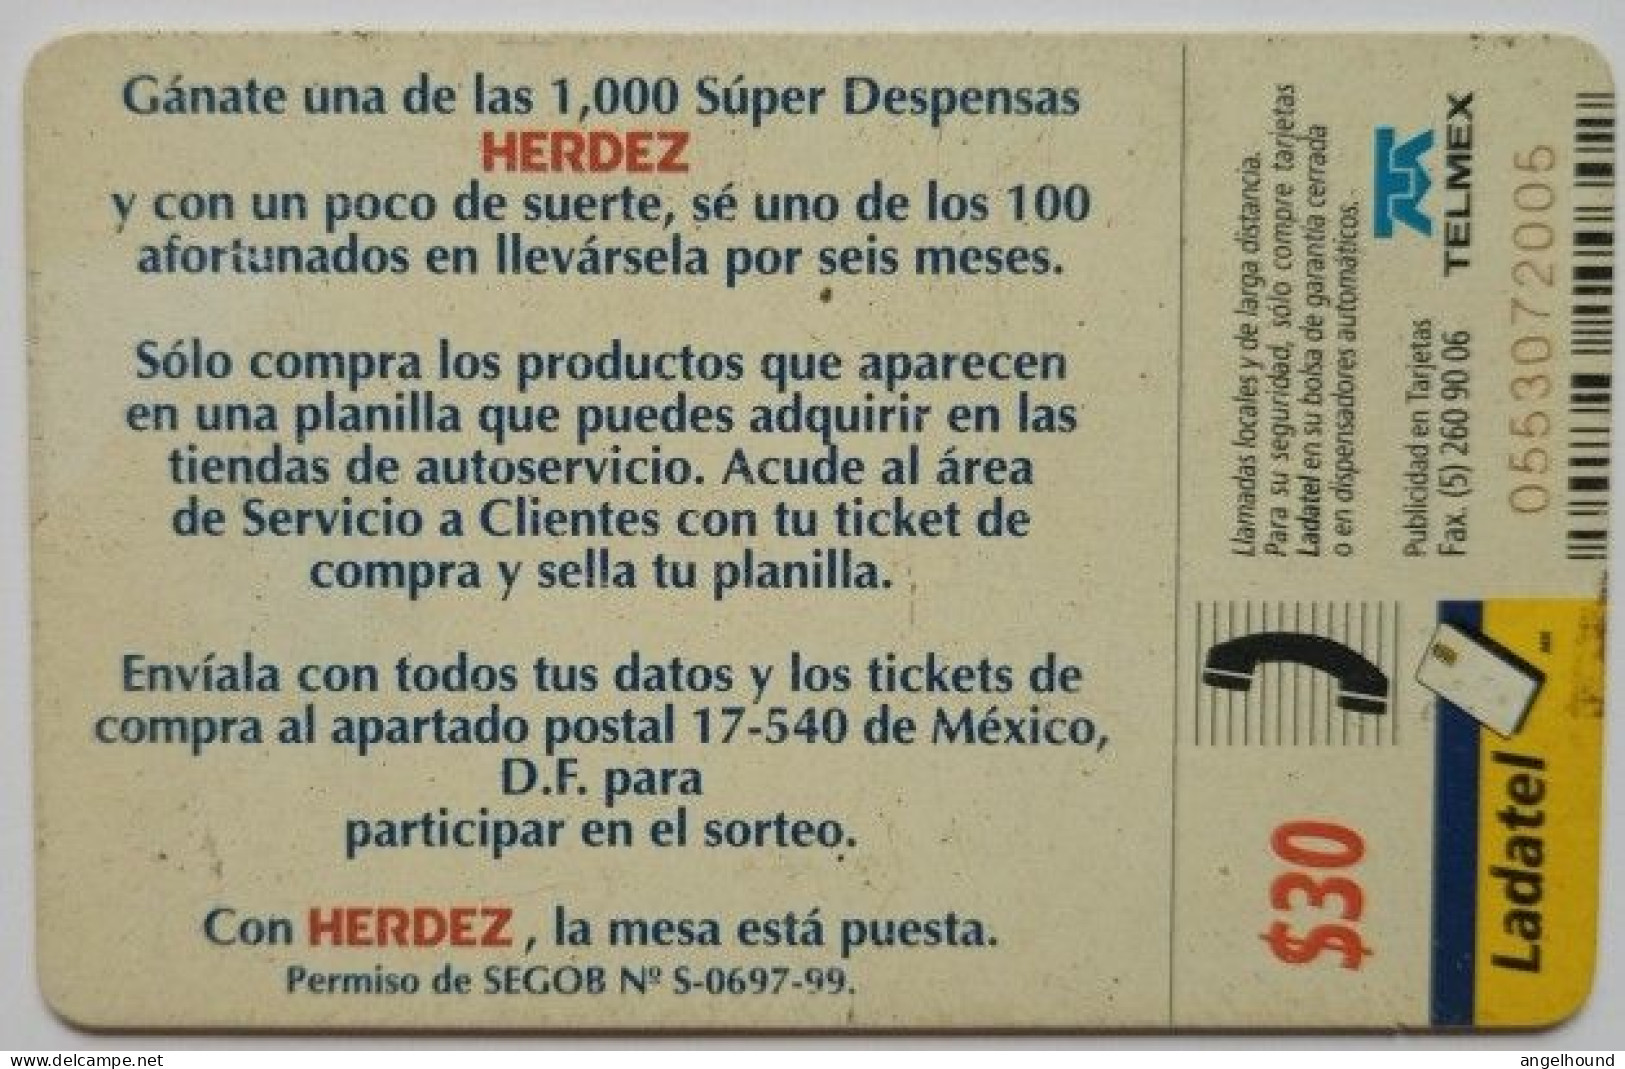 Mexico Ladatel $30 Chip Card - Herdez Despensa - México